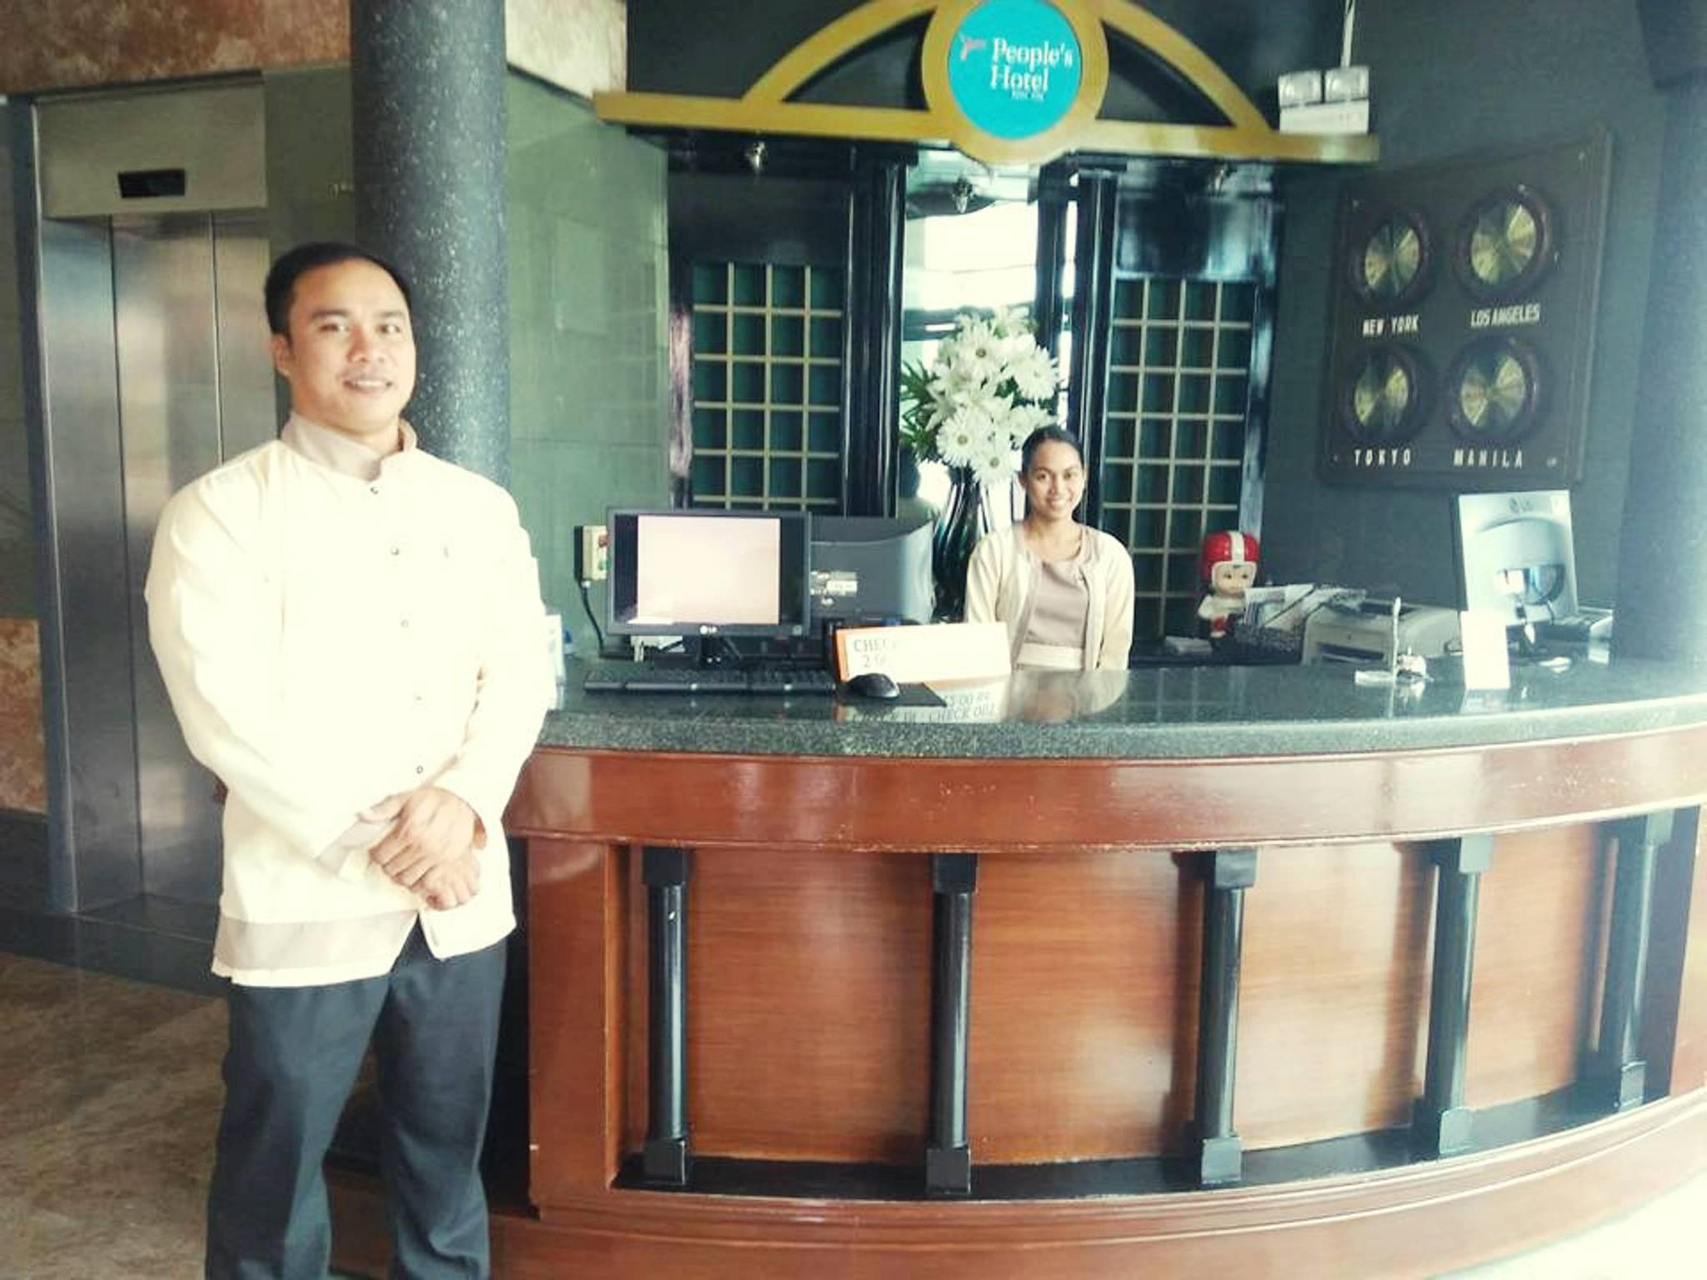 People's Hotel, Iloilo City